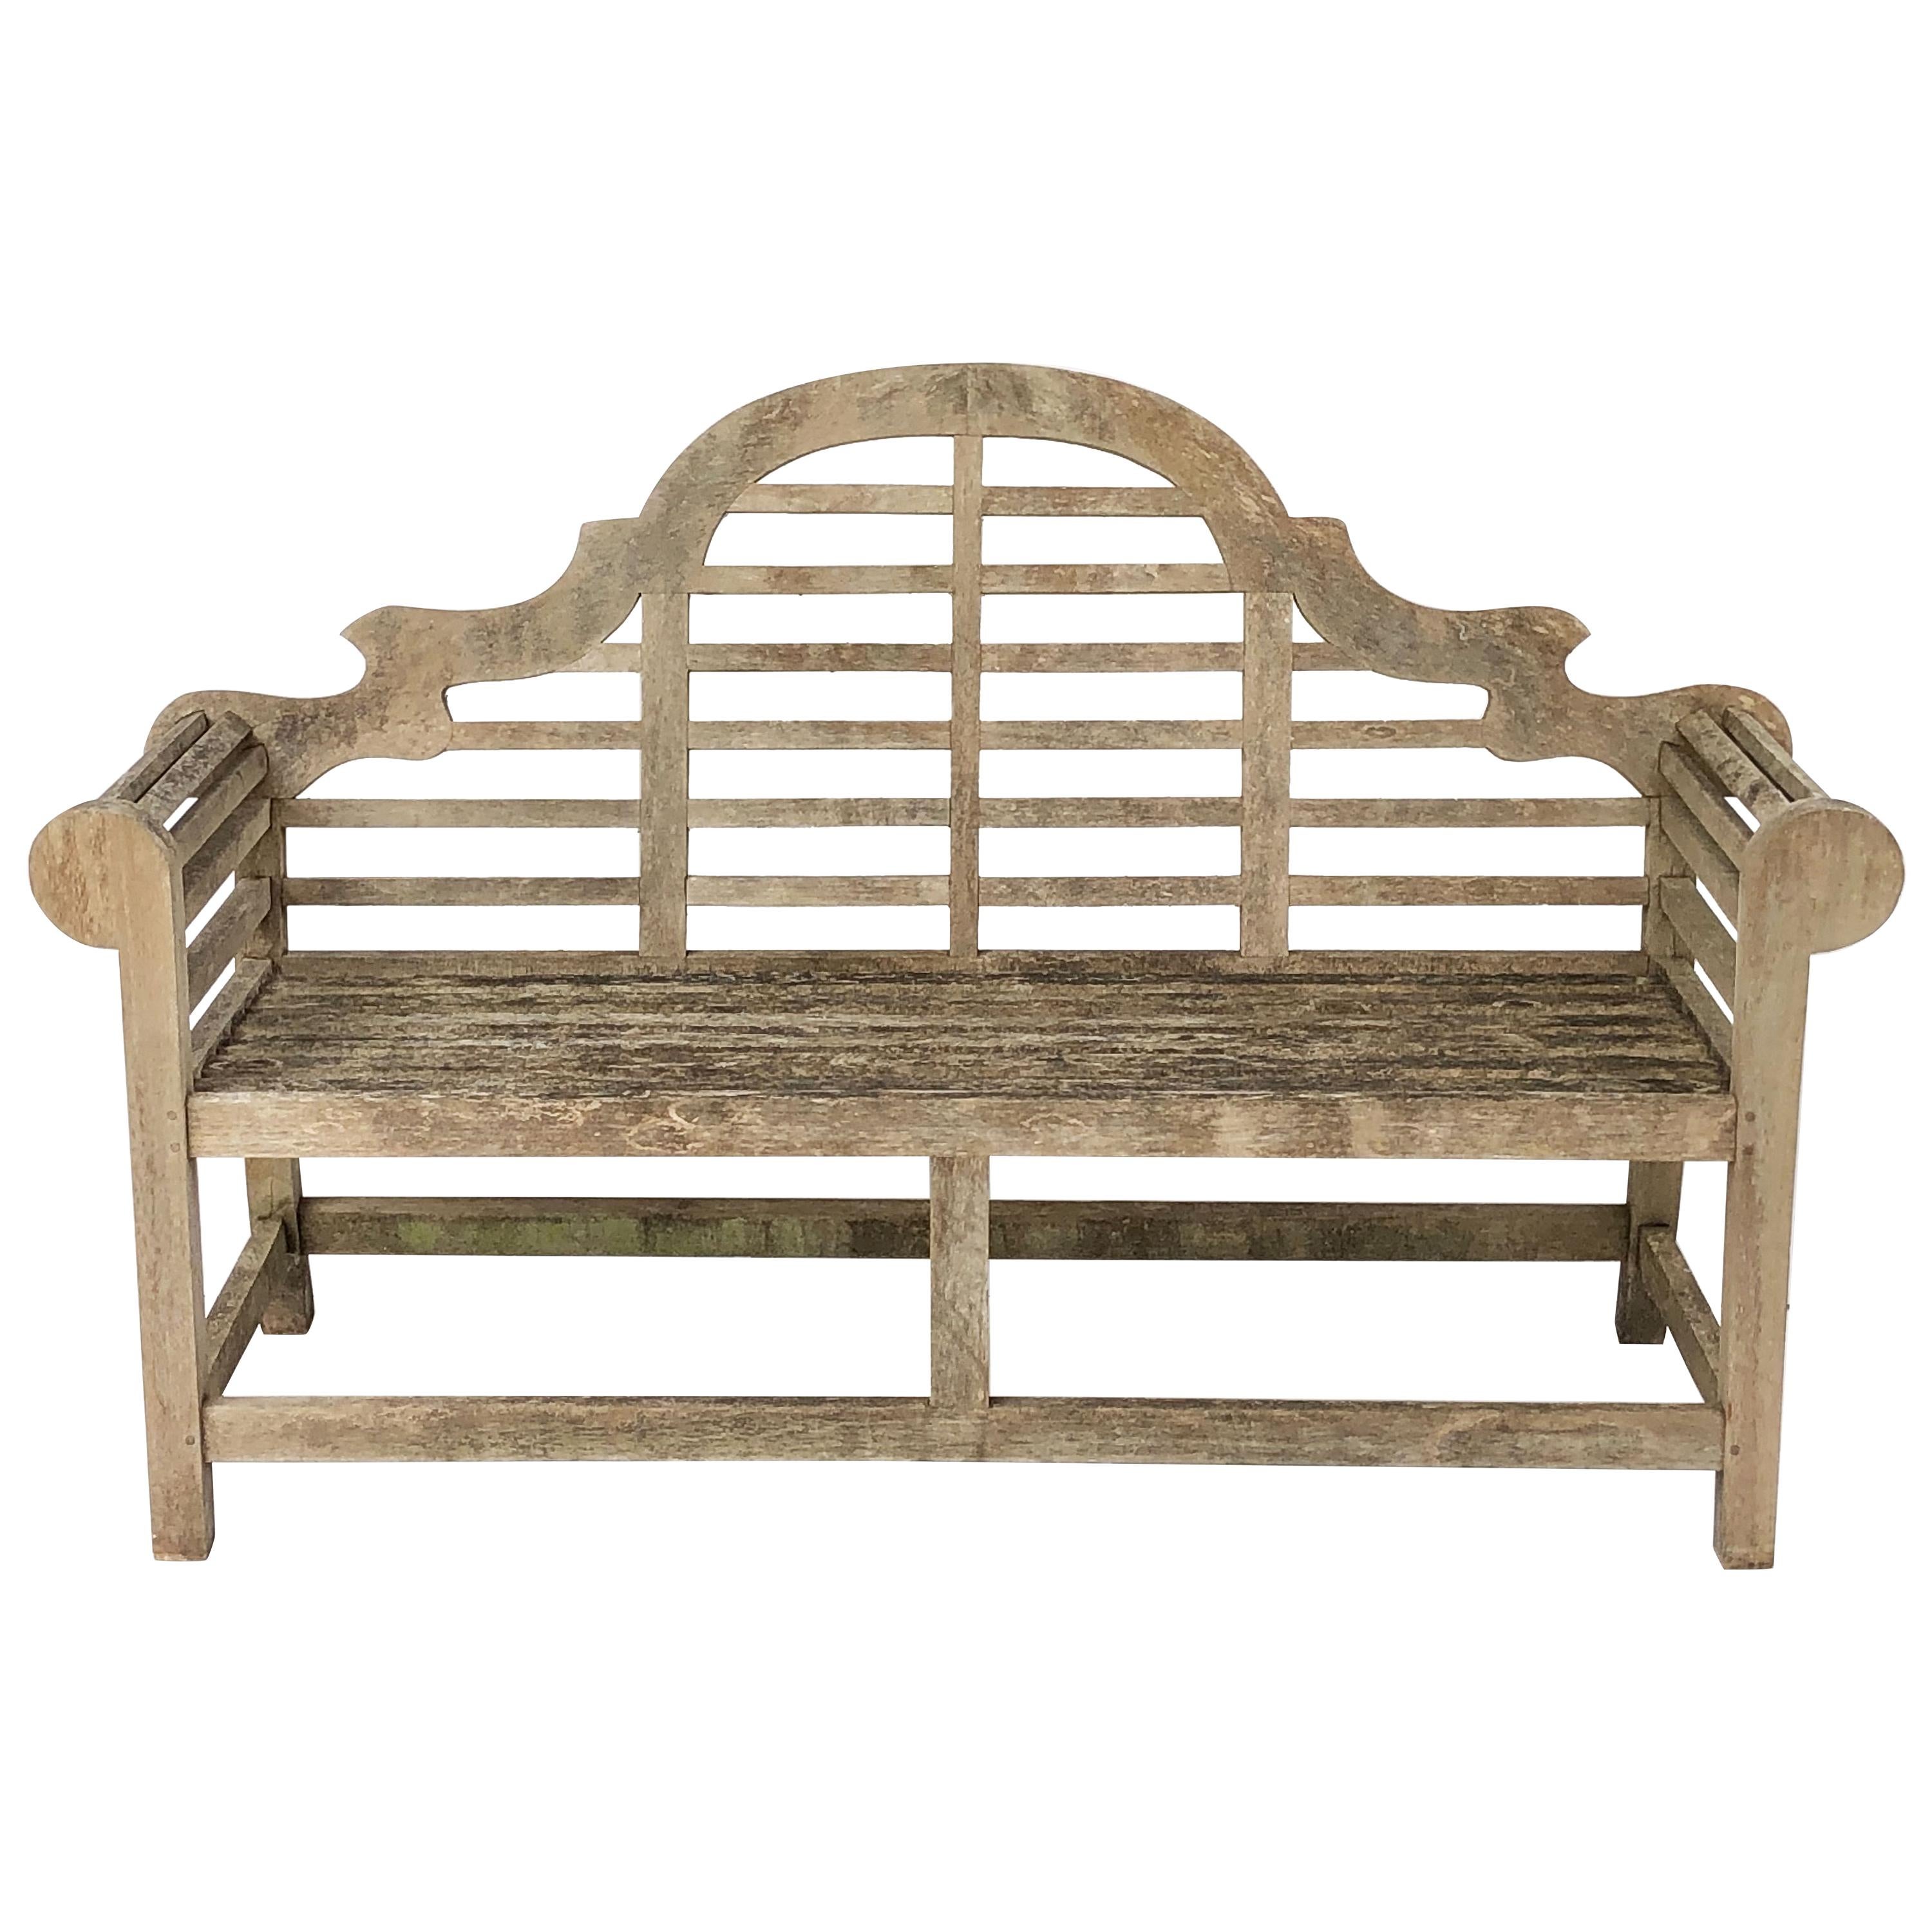 Lutyens Style Teak Garden Bench Seat from England